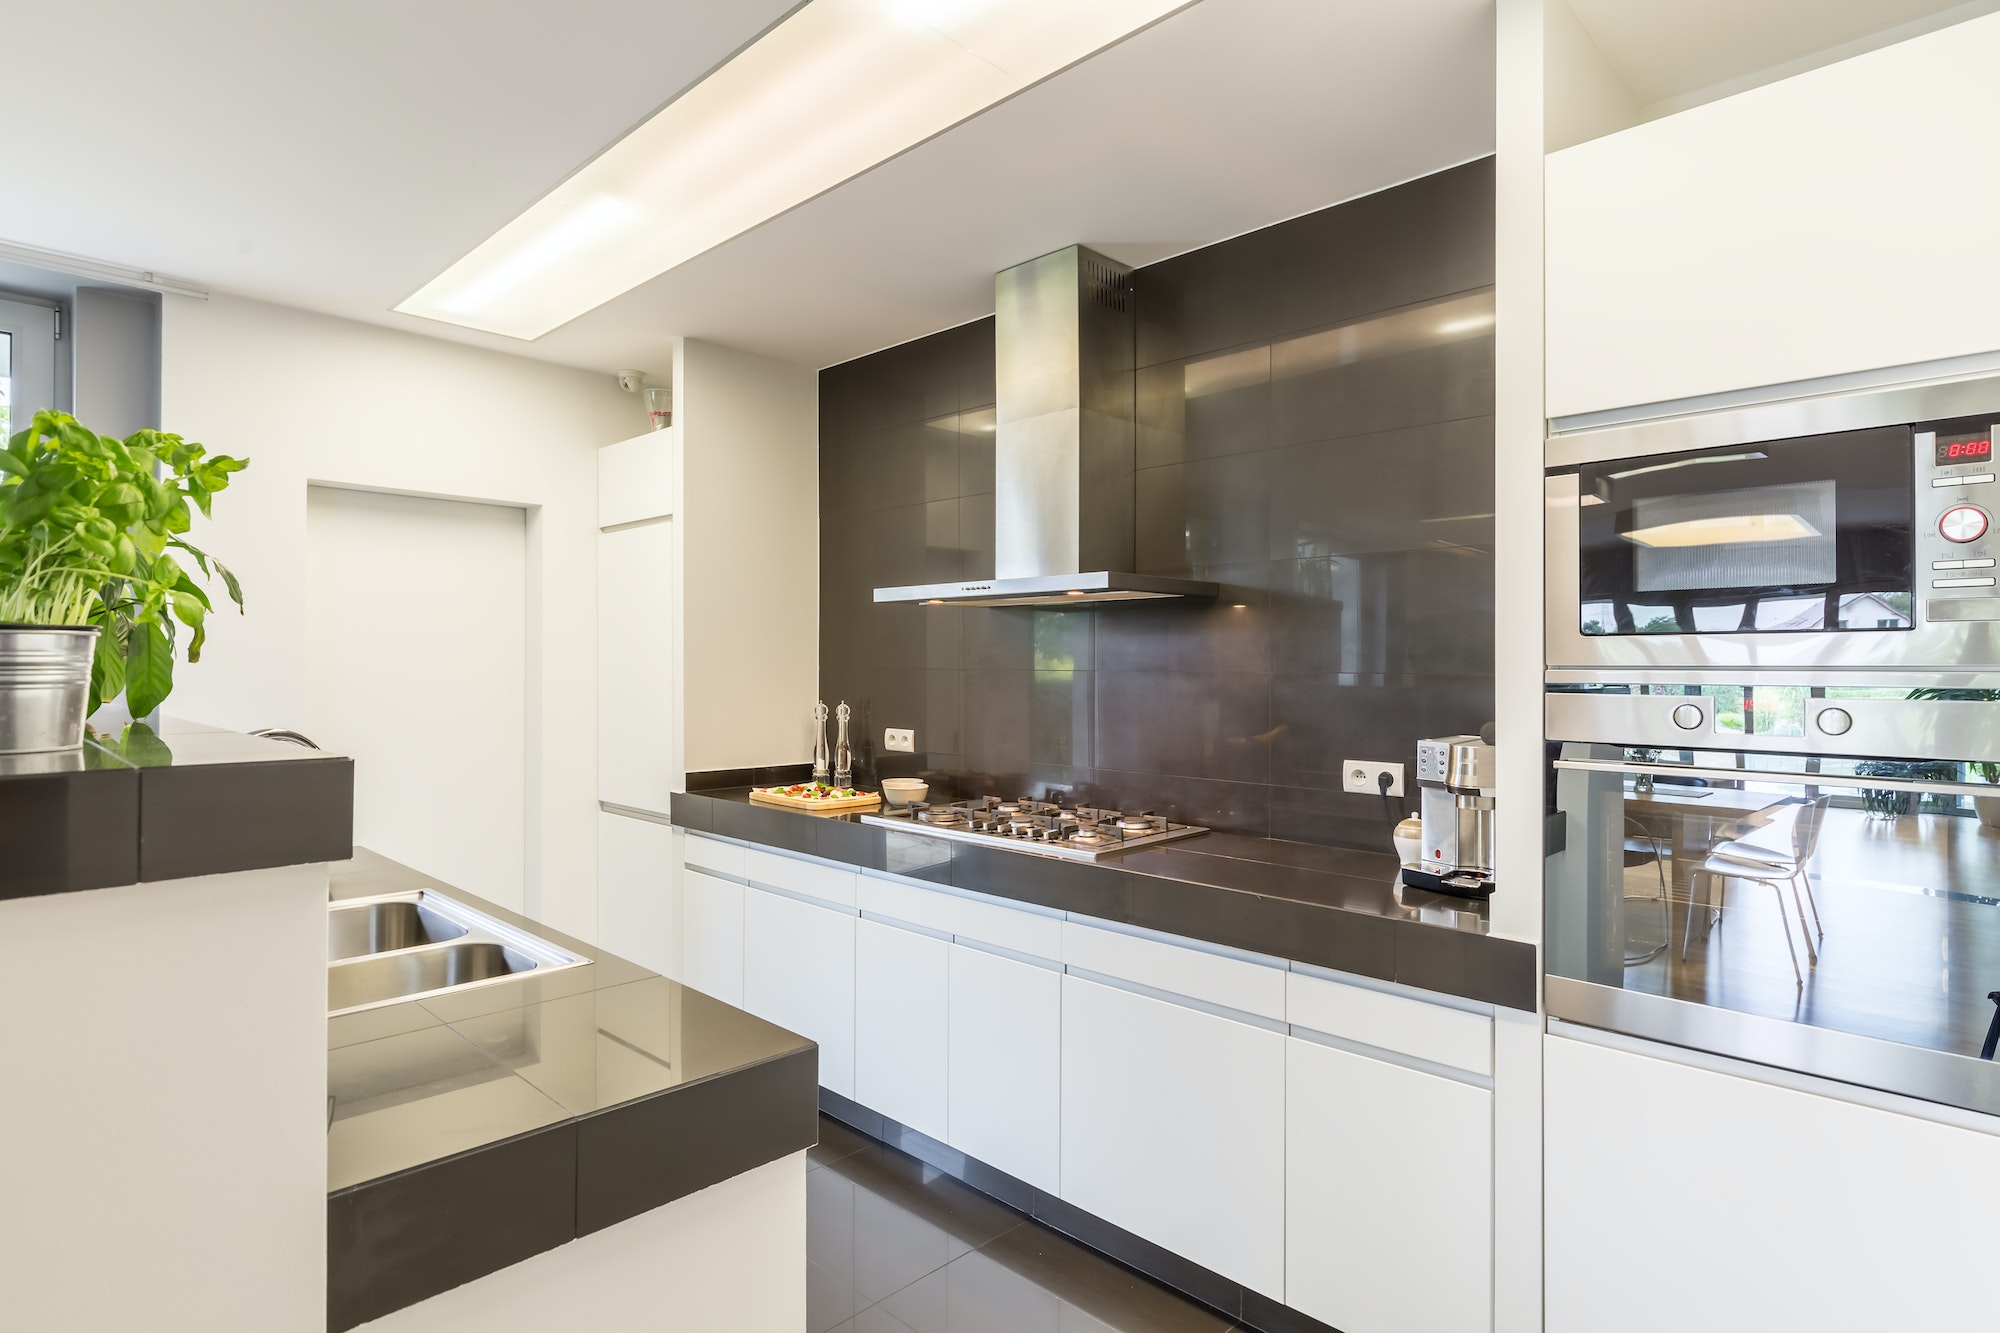 Kitchen with stylish amenities